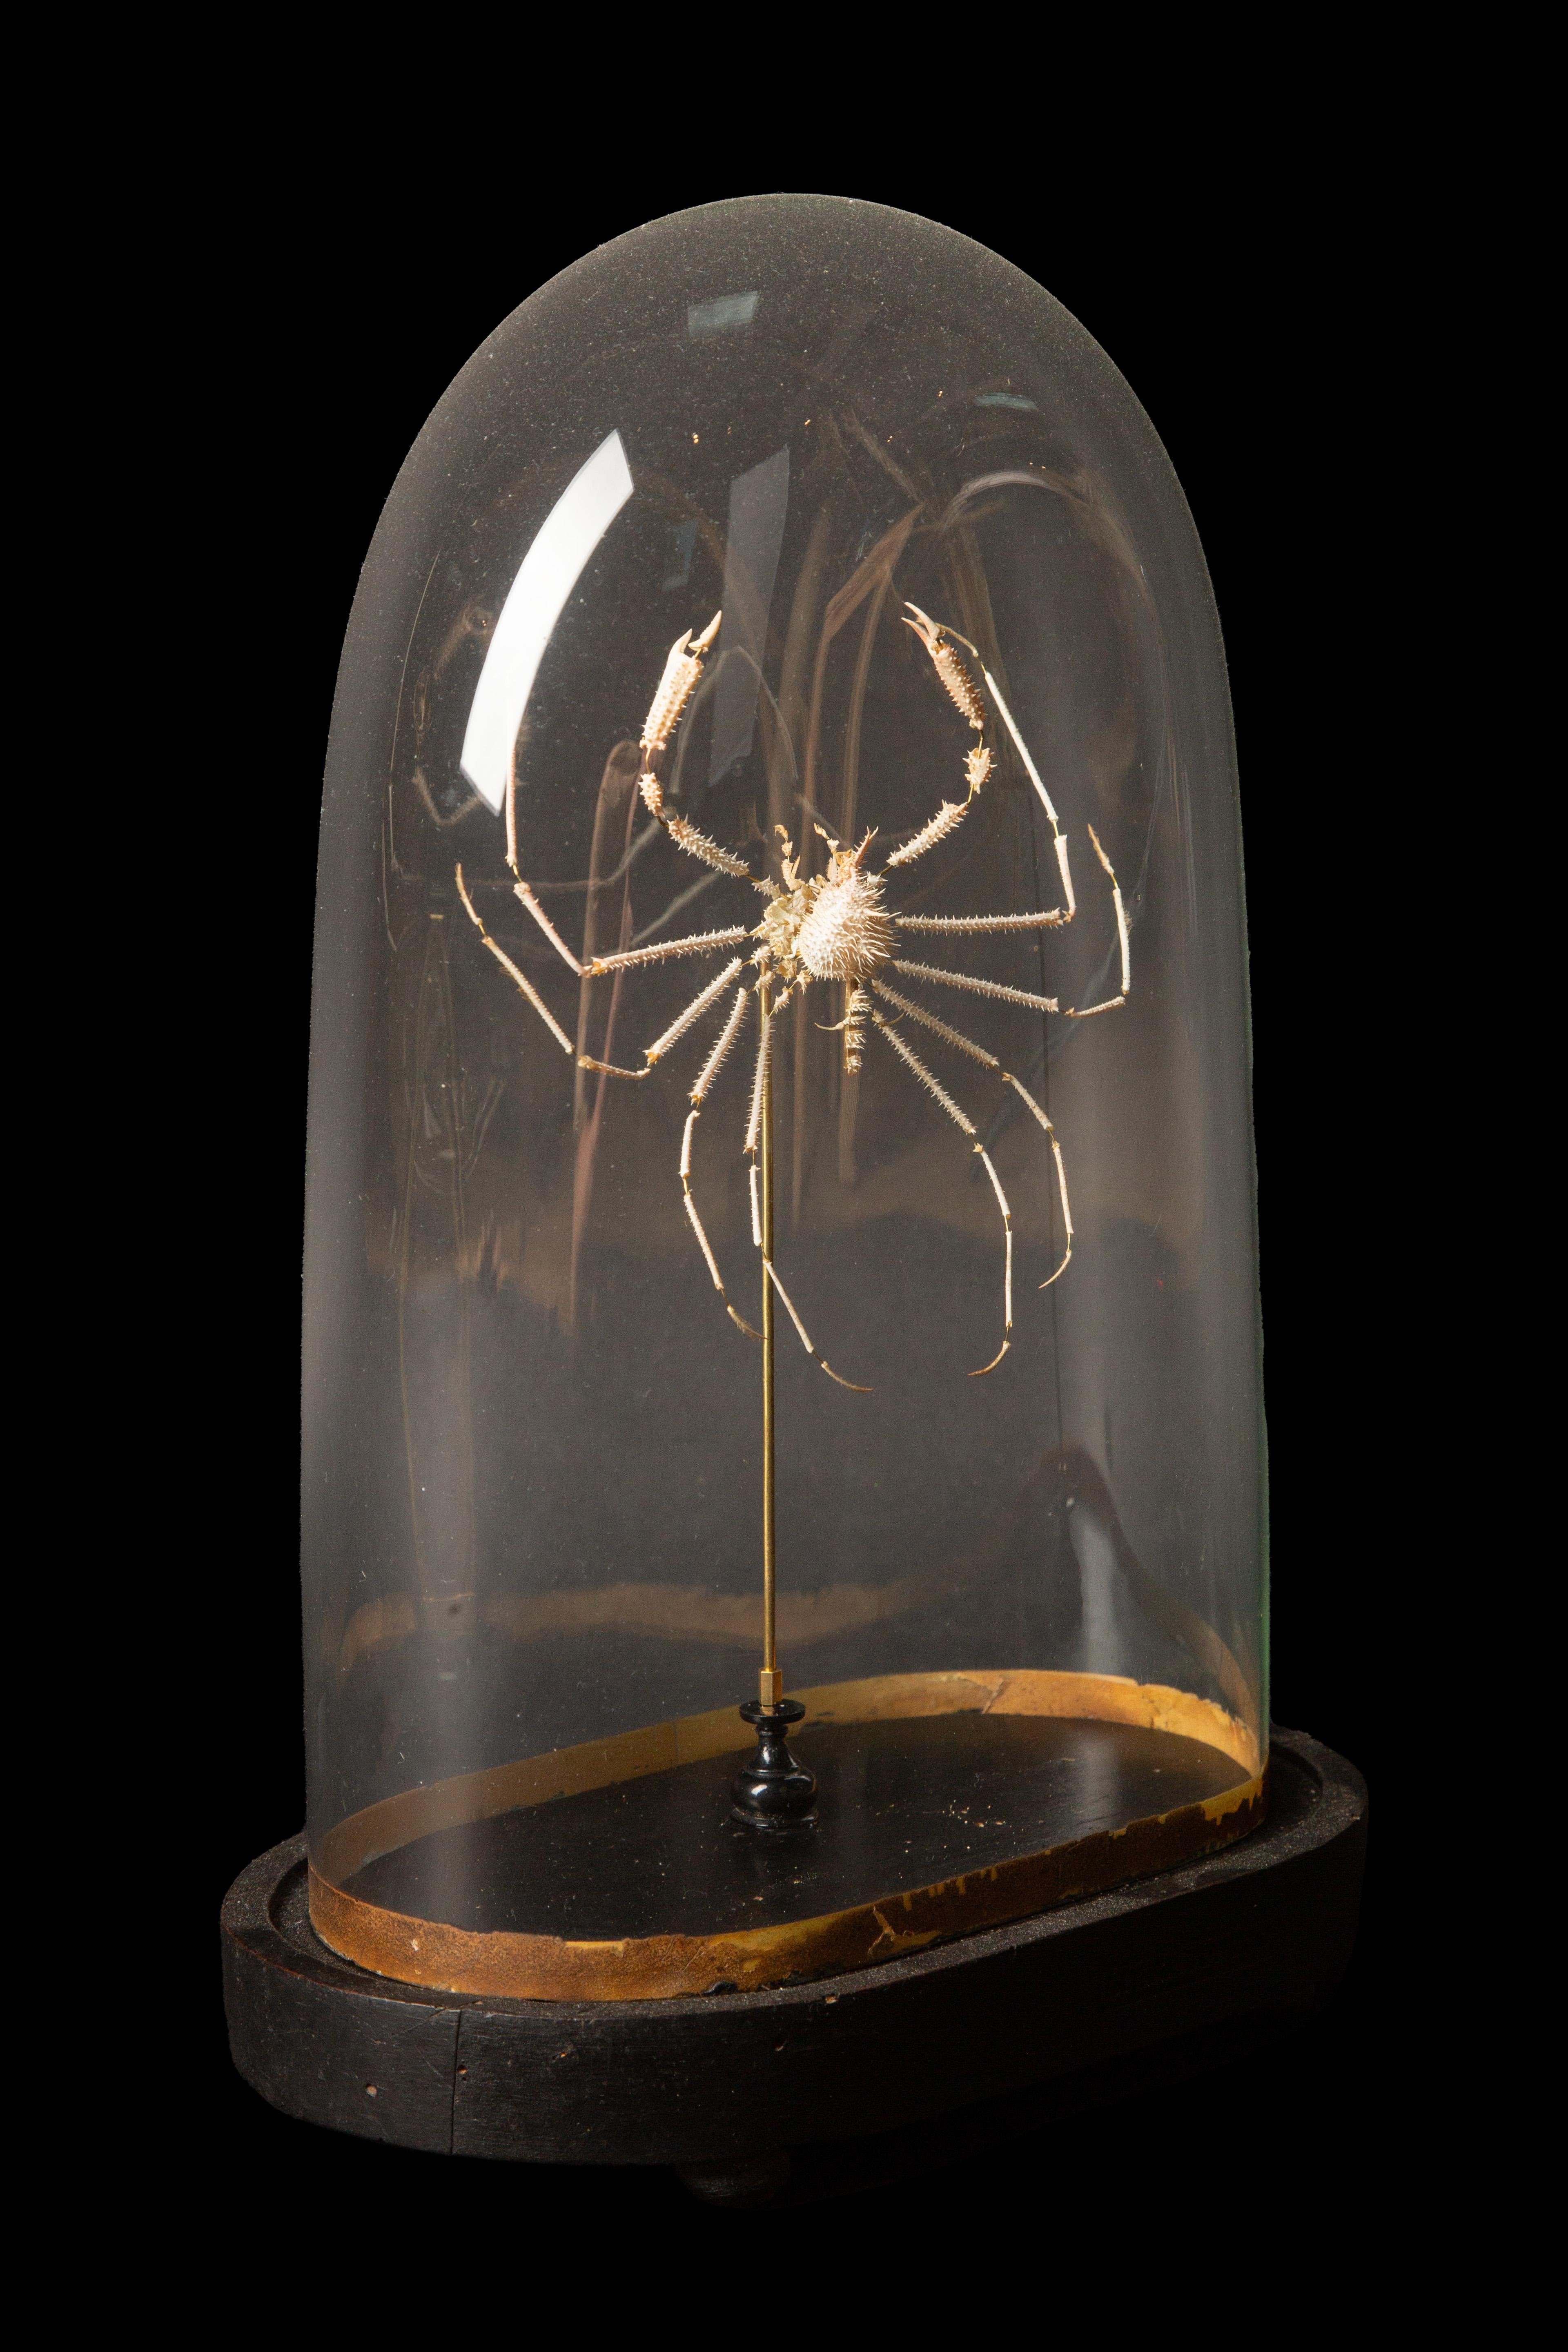 French Rare Deep Sea Deconstructed Spider Crab (Pleistacantha Moseleyi) Specimen